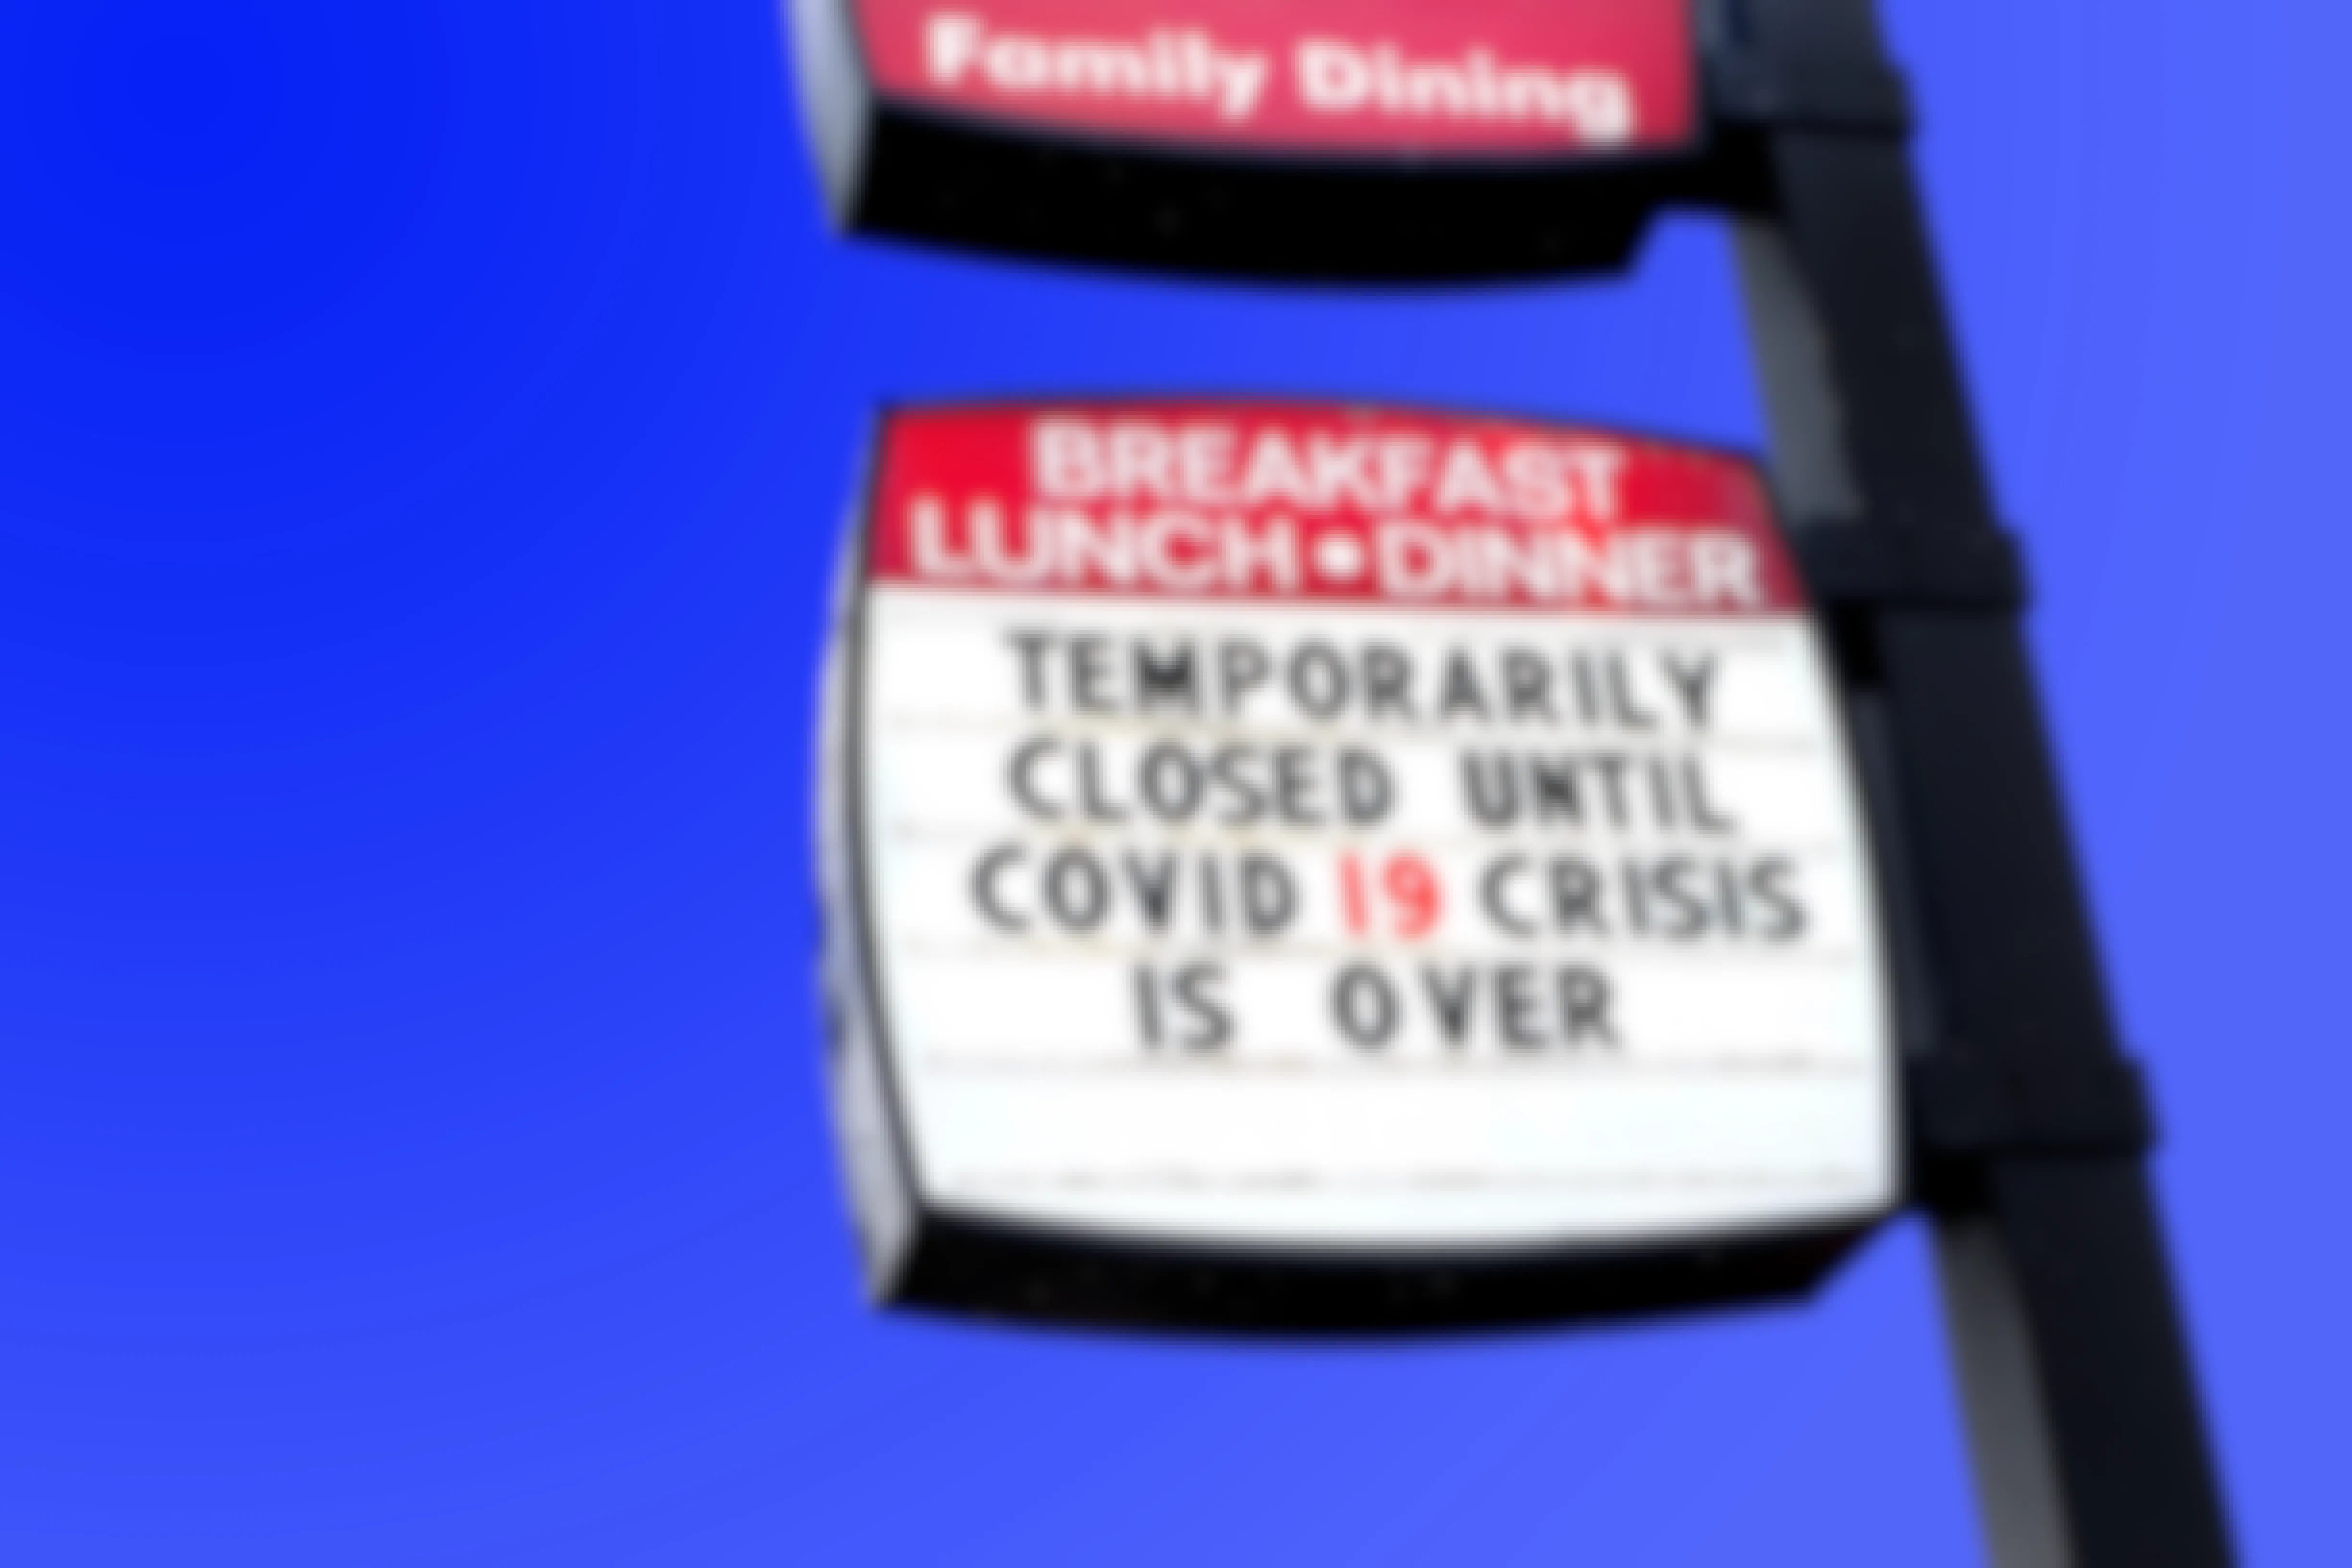 Restaurant sign announcing closure until COVID-19 passes over.